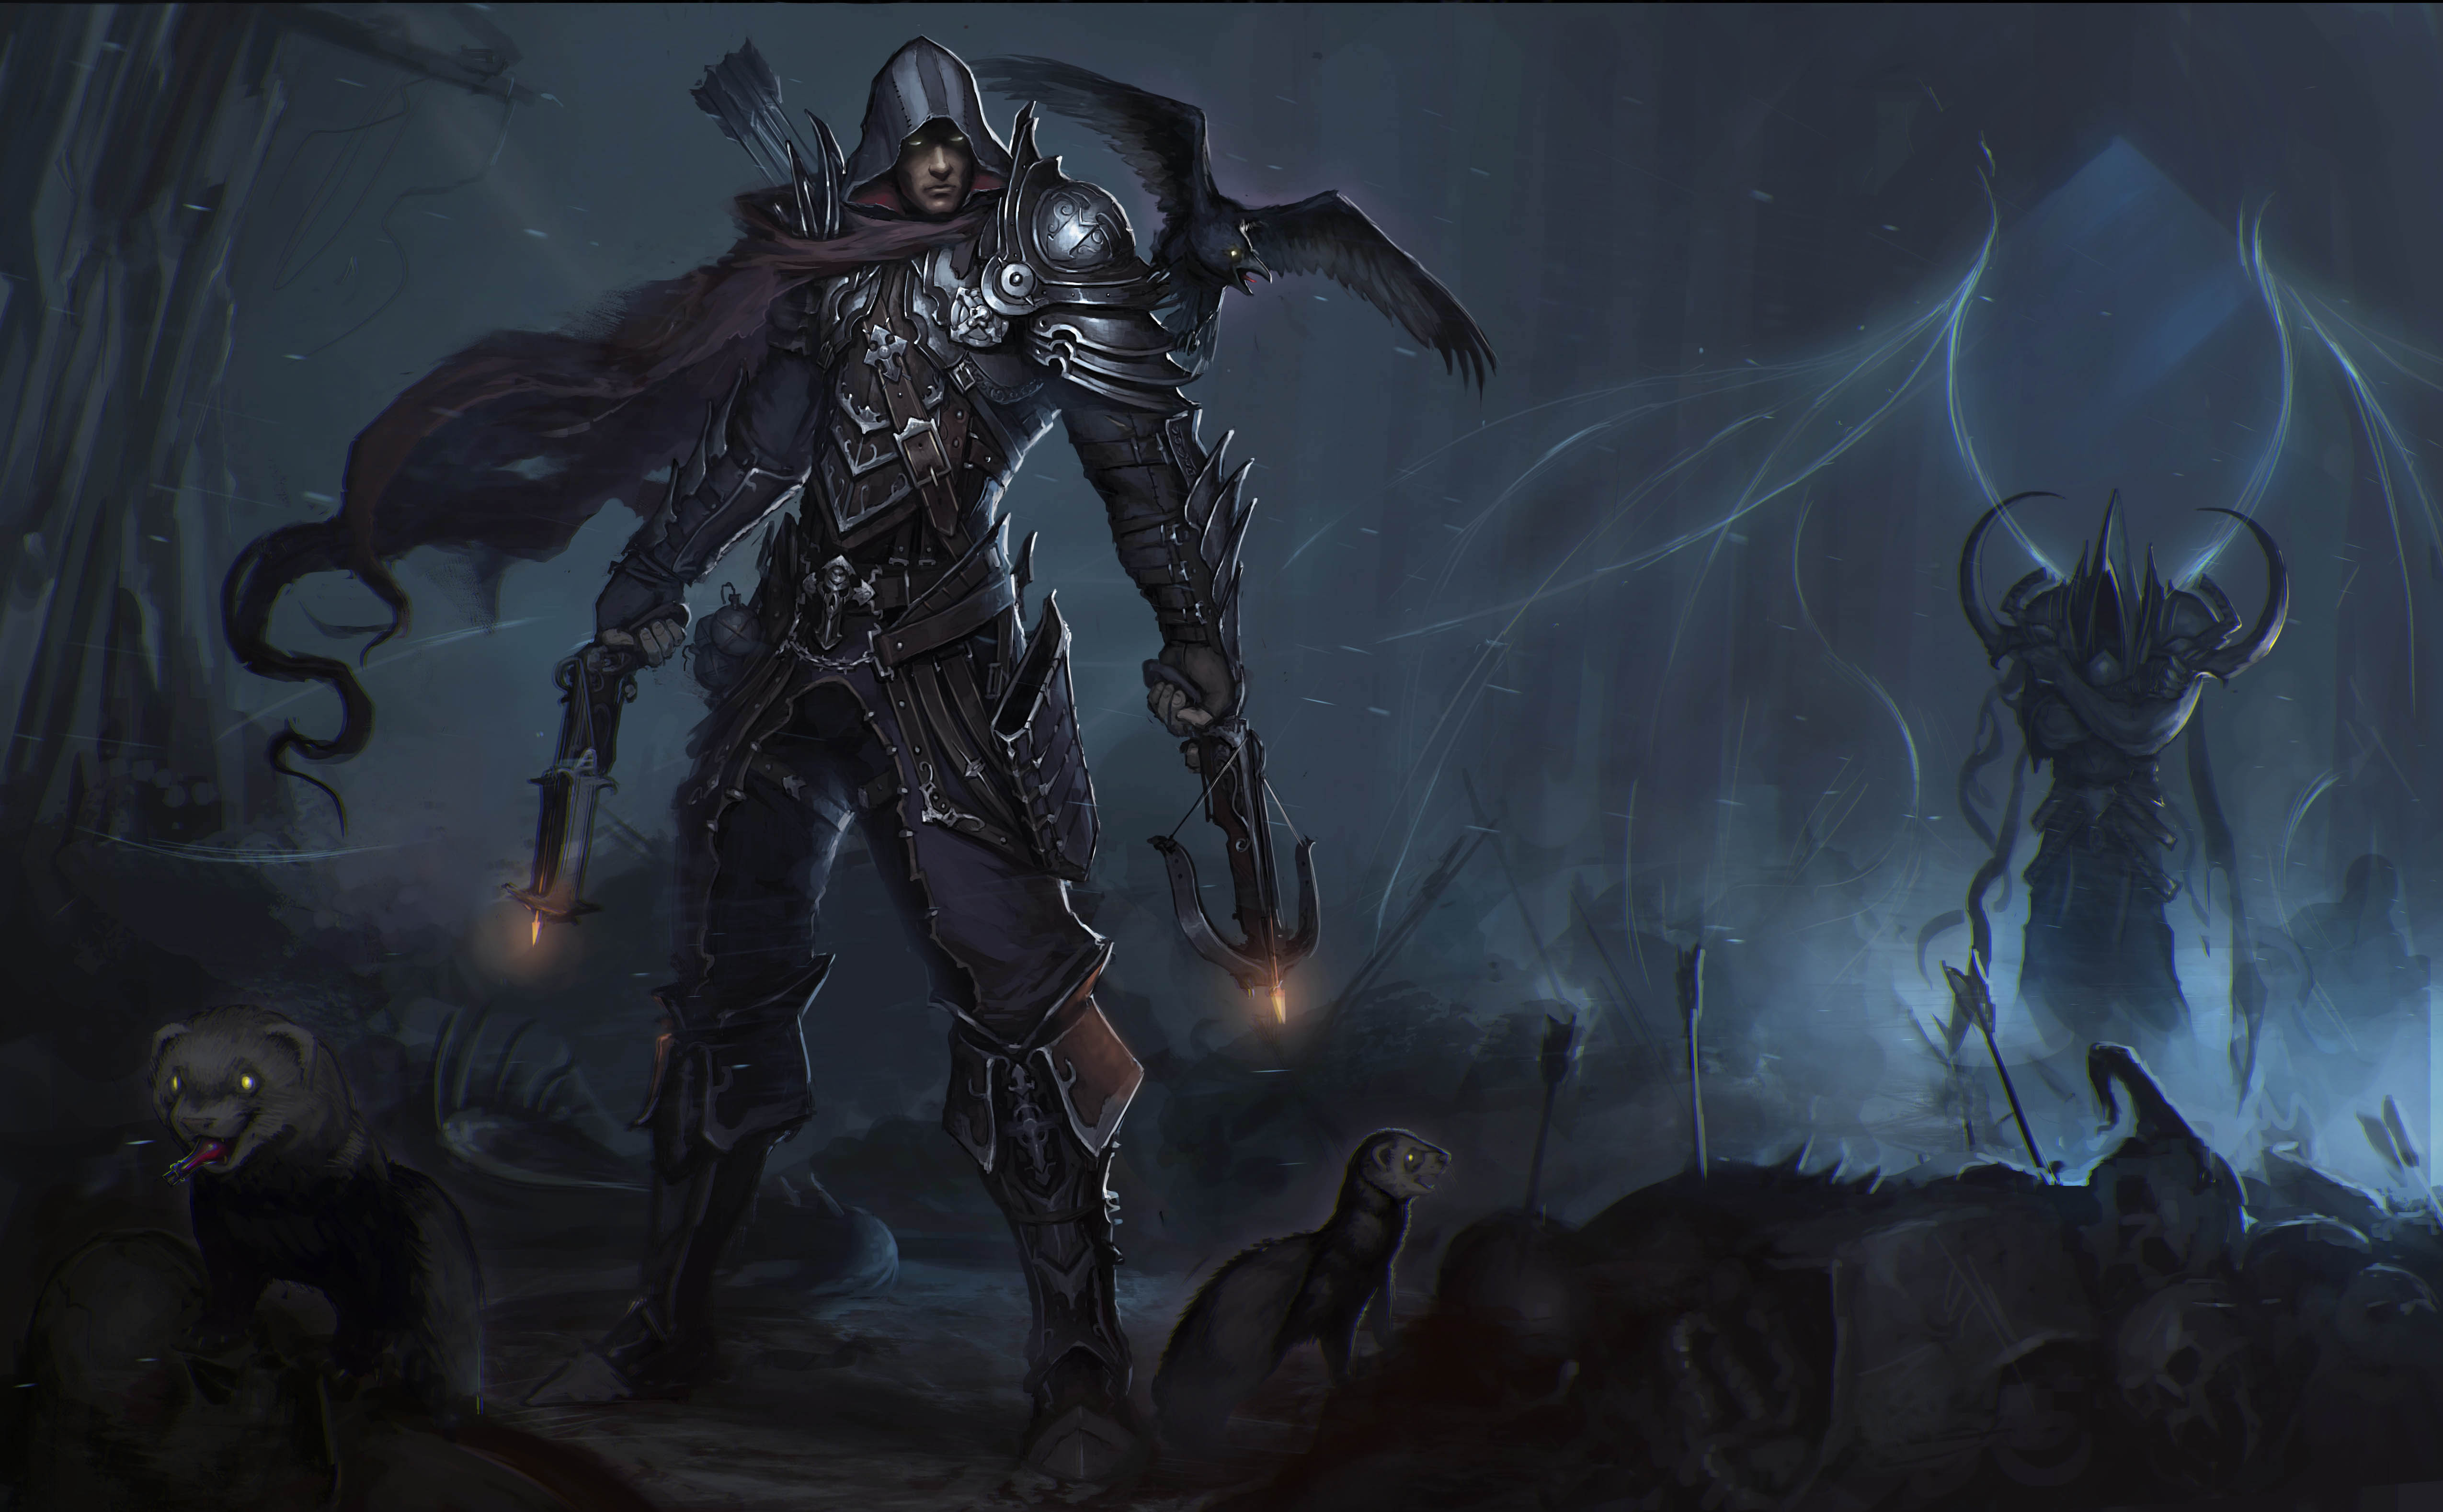 Baixe gratuitamente a imagem Diablo, Videogame, Caçador De Demônios (Diablo Iii), Maltael (Diablo Iii), Diablo Iii: Reaper Of Souls na área de trabalho do seu PC